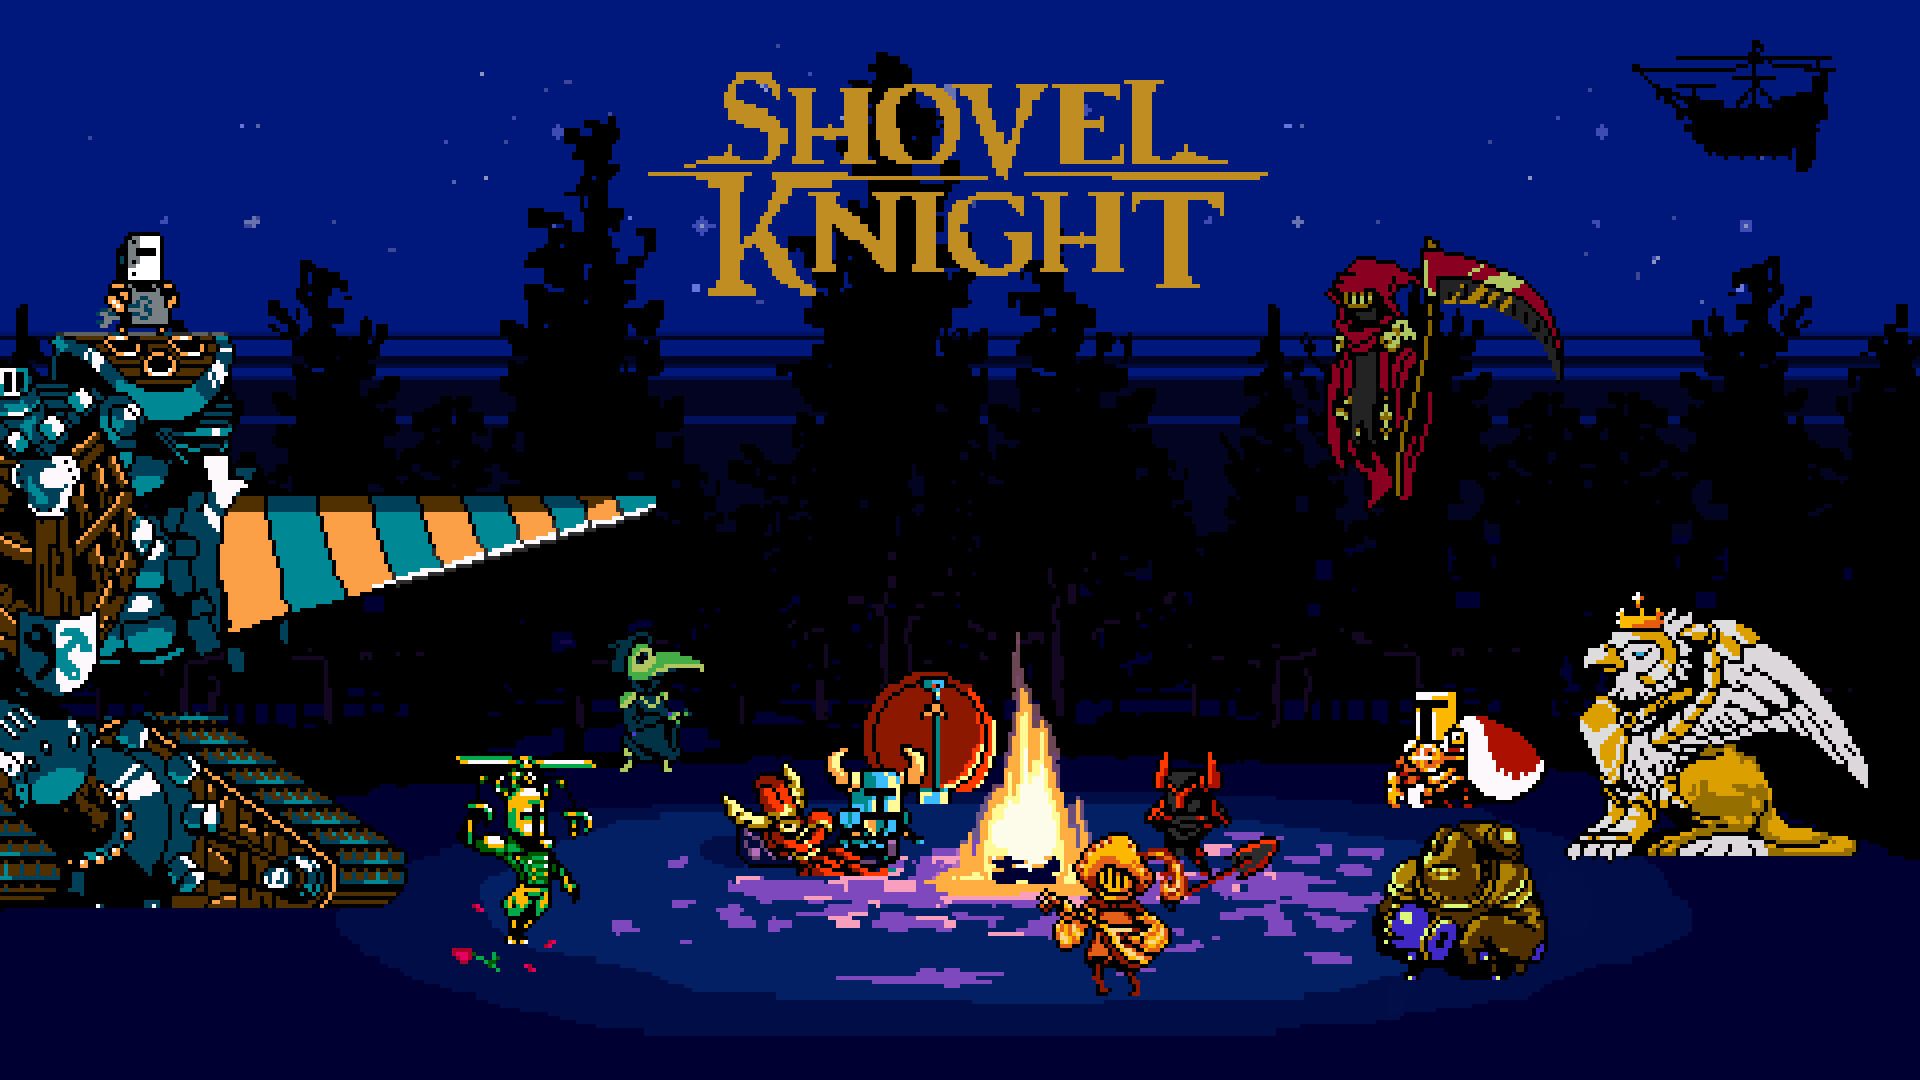 Made a Shovel Knight wallpaper. pls don't sue